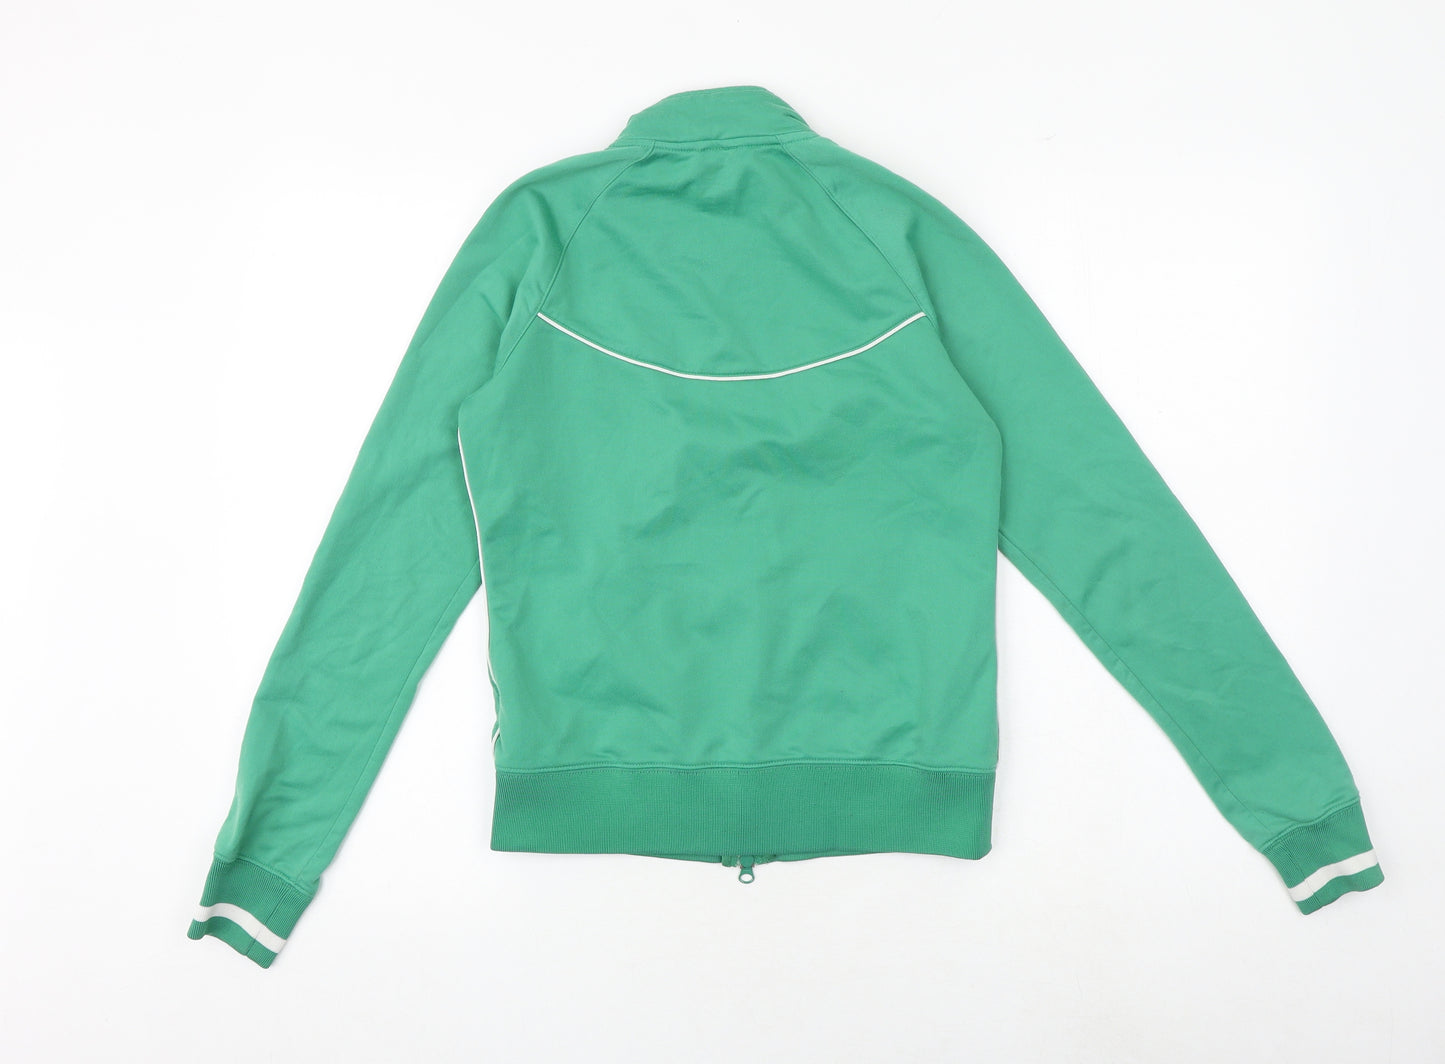 Nike Boys Green Bomber Jacket Jacket Size 11-12 Years Zip